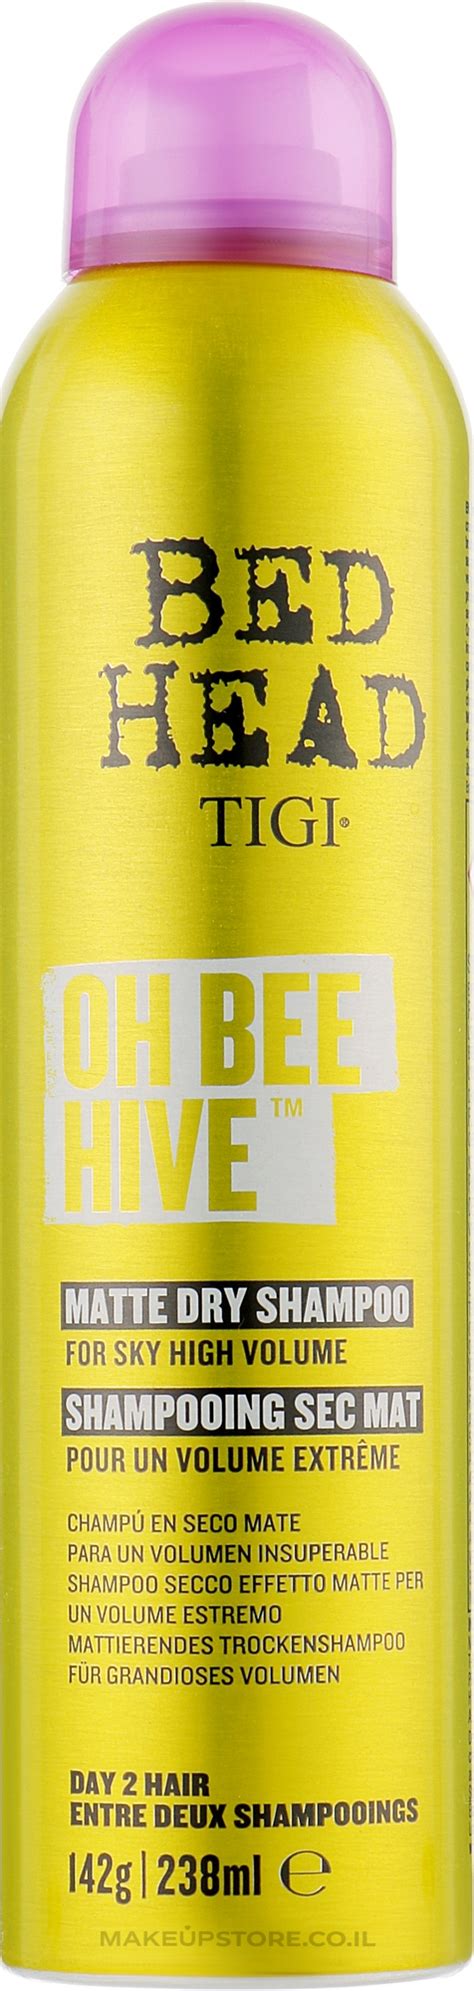 Makeupstore co il Tigi Bed Head Oh Bee Hive Matte Dry Shampoo שמפו יבש